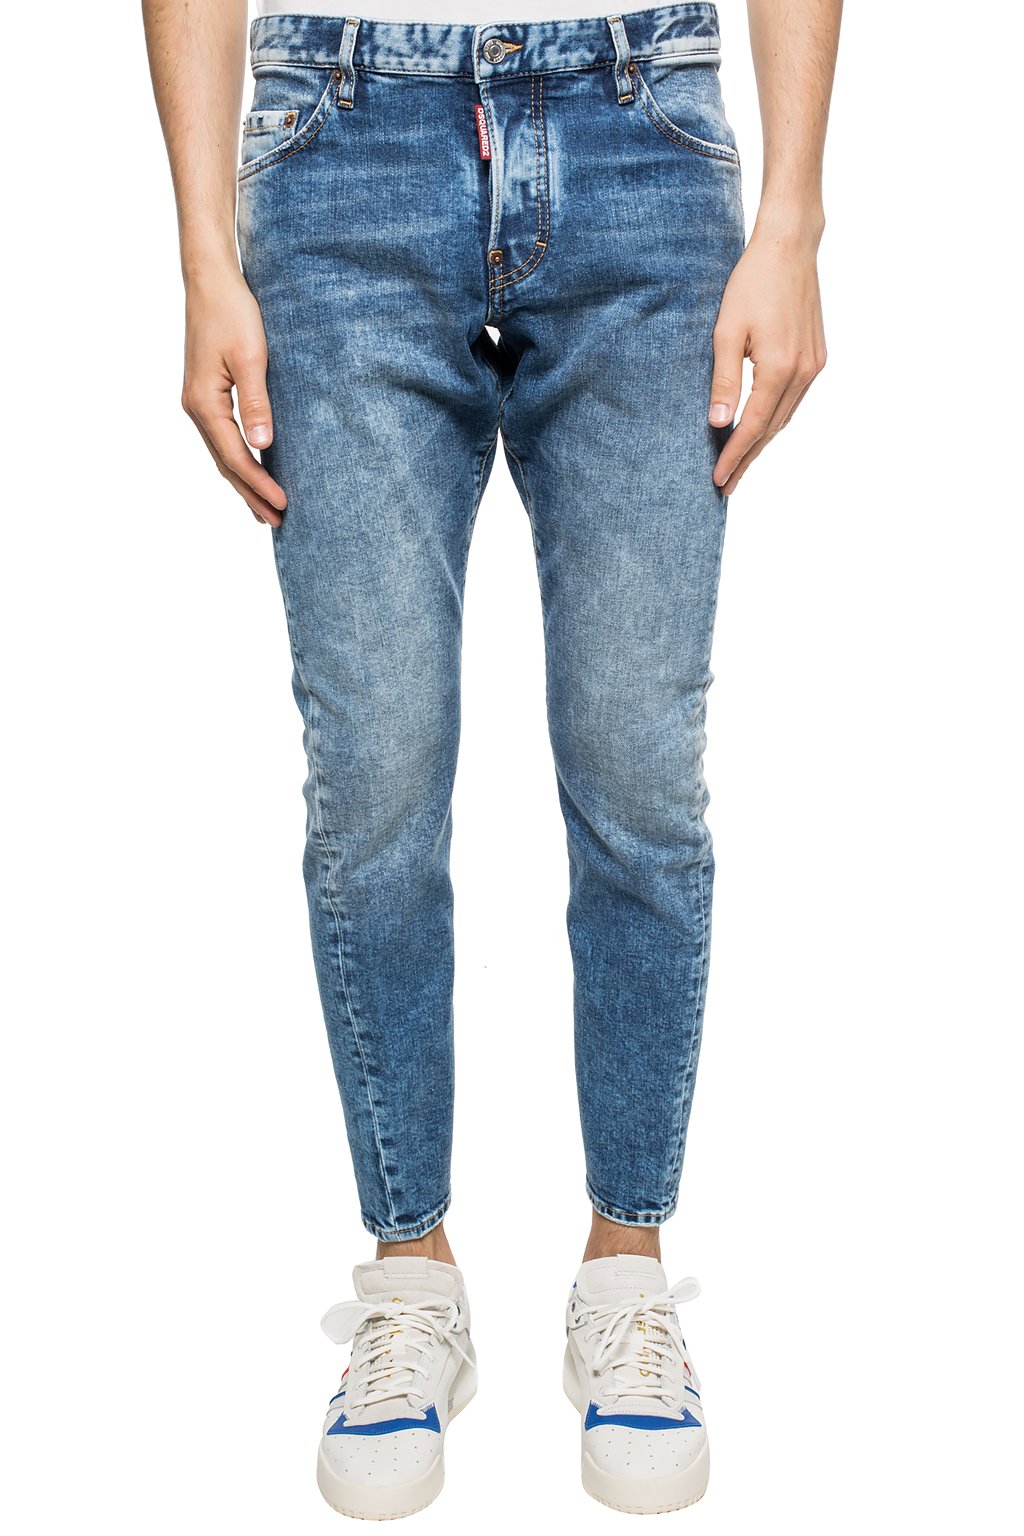 Dsquared2 ‘Sexy Twist Jean’ jeans | Men's Clothing | Vitkac